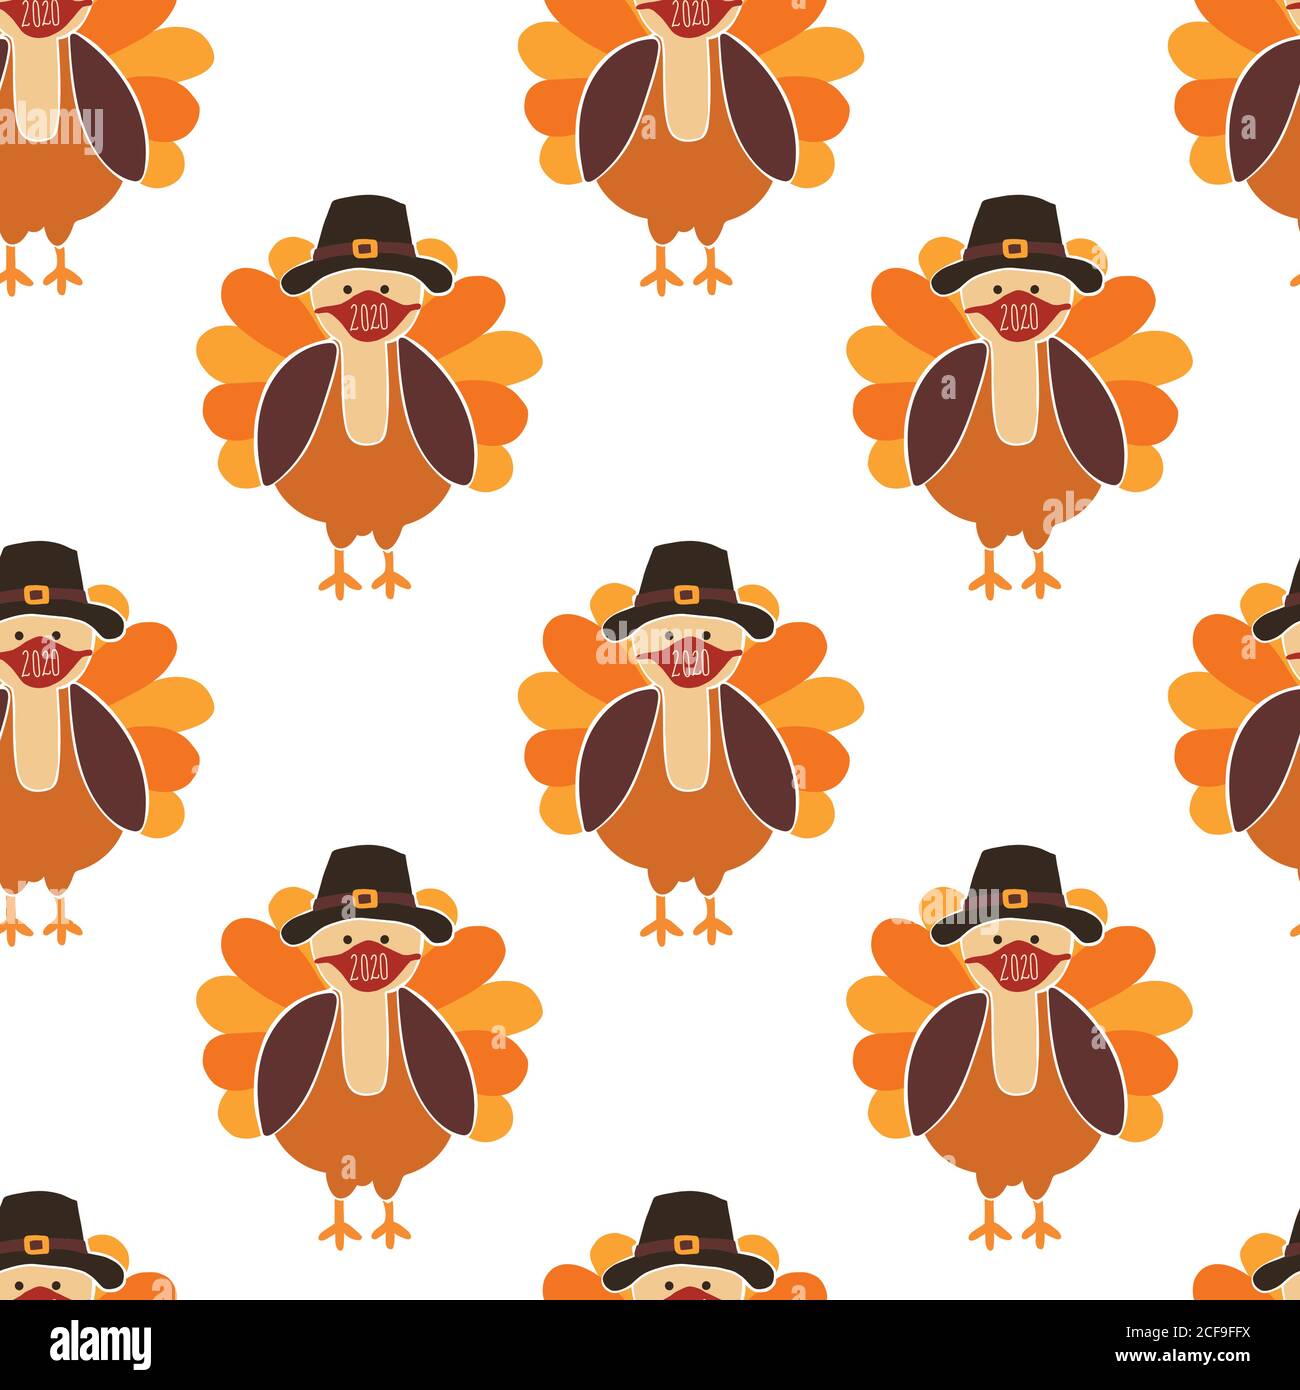 Corona Thanksgiving Turkey Seamless Vector Pattern. Turkeys wearing face masks. Covid 19 virus autumn background. For Holiday 2020 decoration, fabric Stock Vector